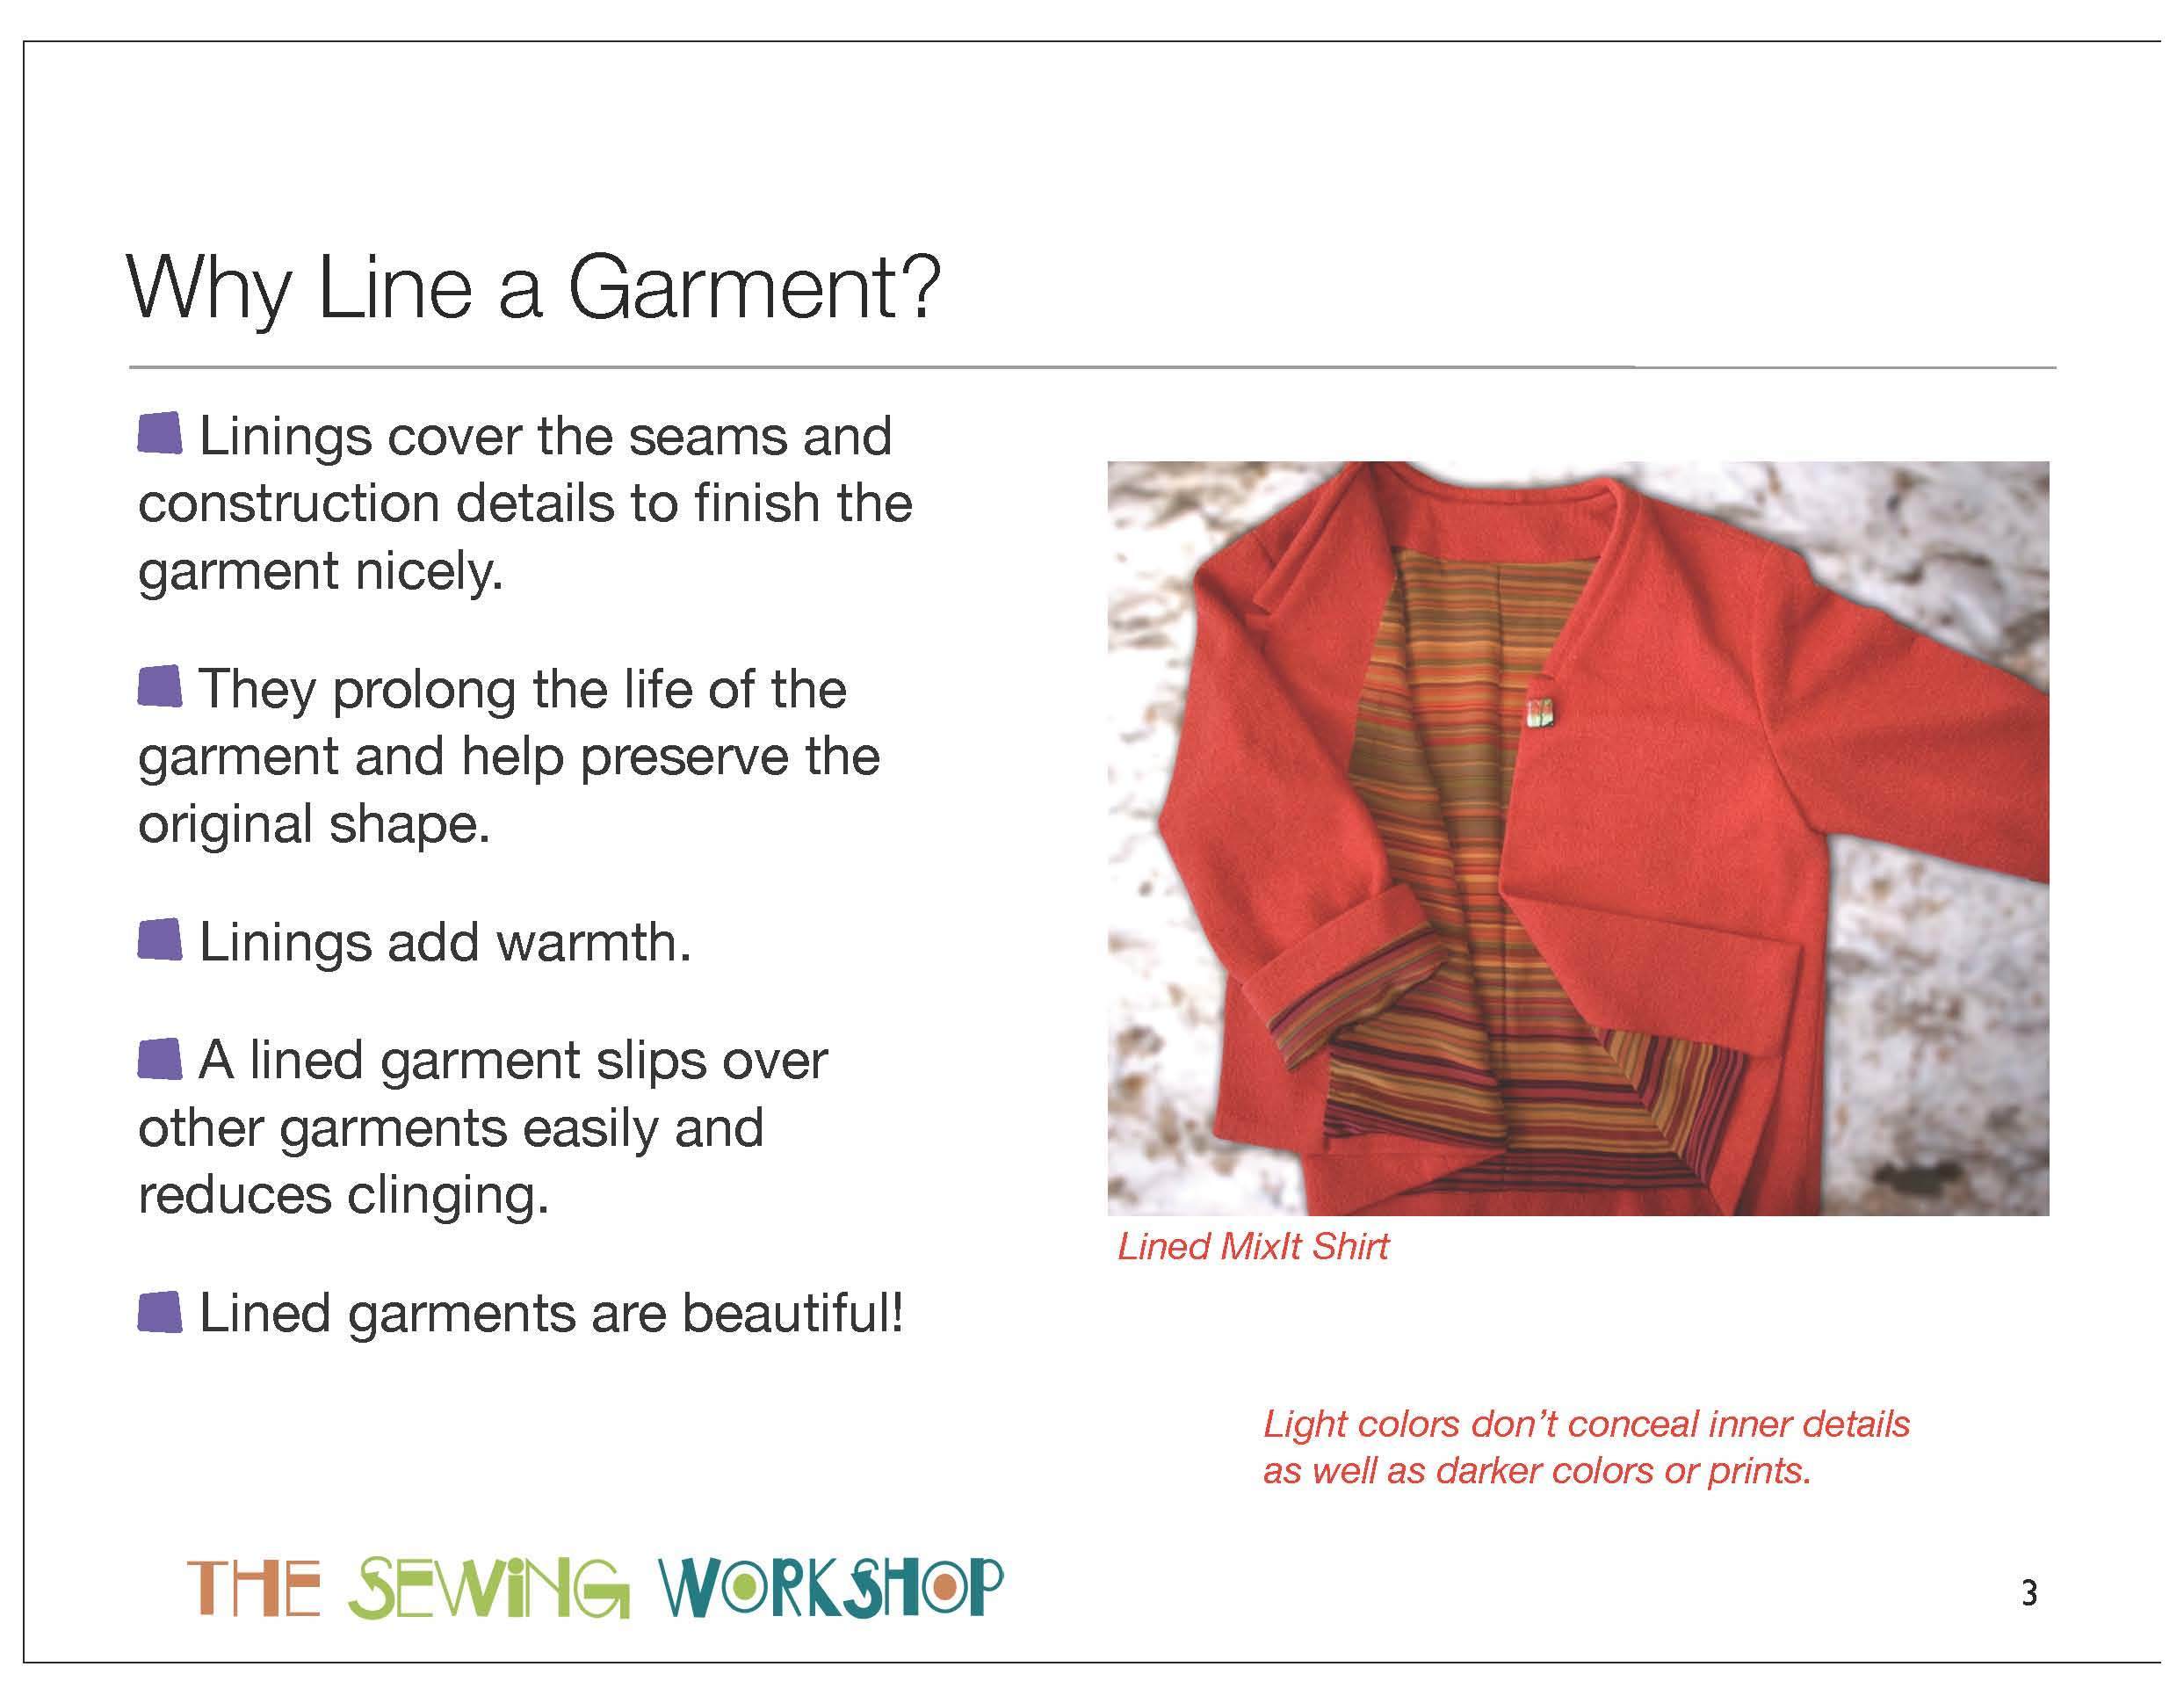 Why Line a Garment?